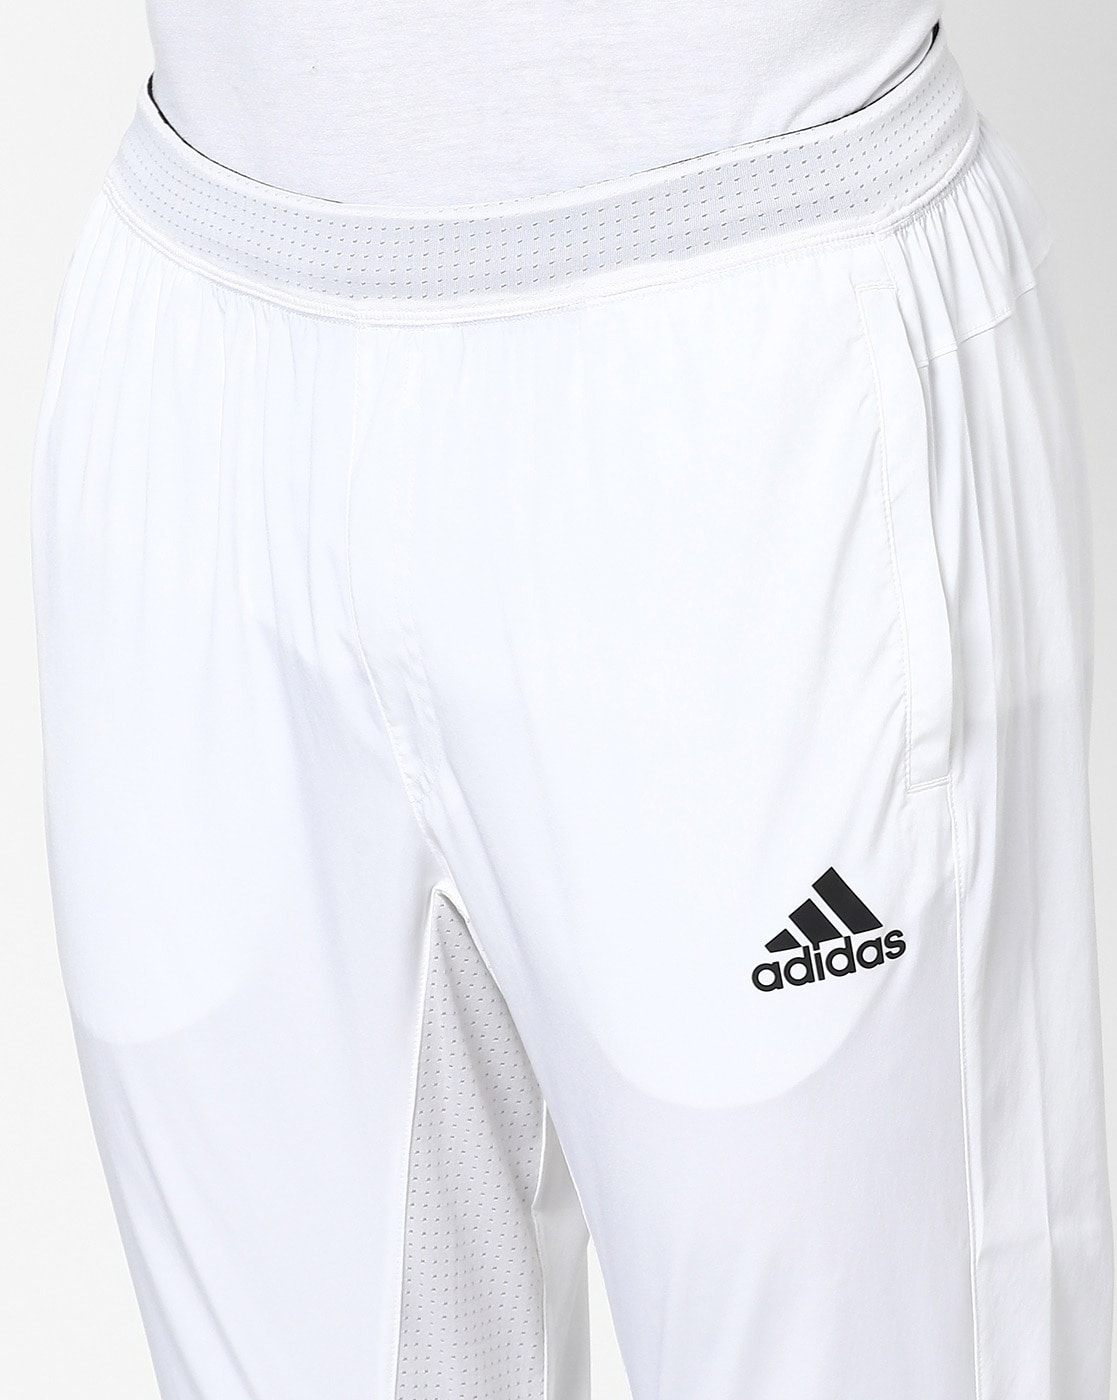 adidas Aeroready 3-Stripes Slim Short Pants Beige | Traininn